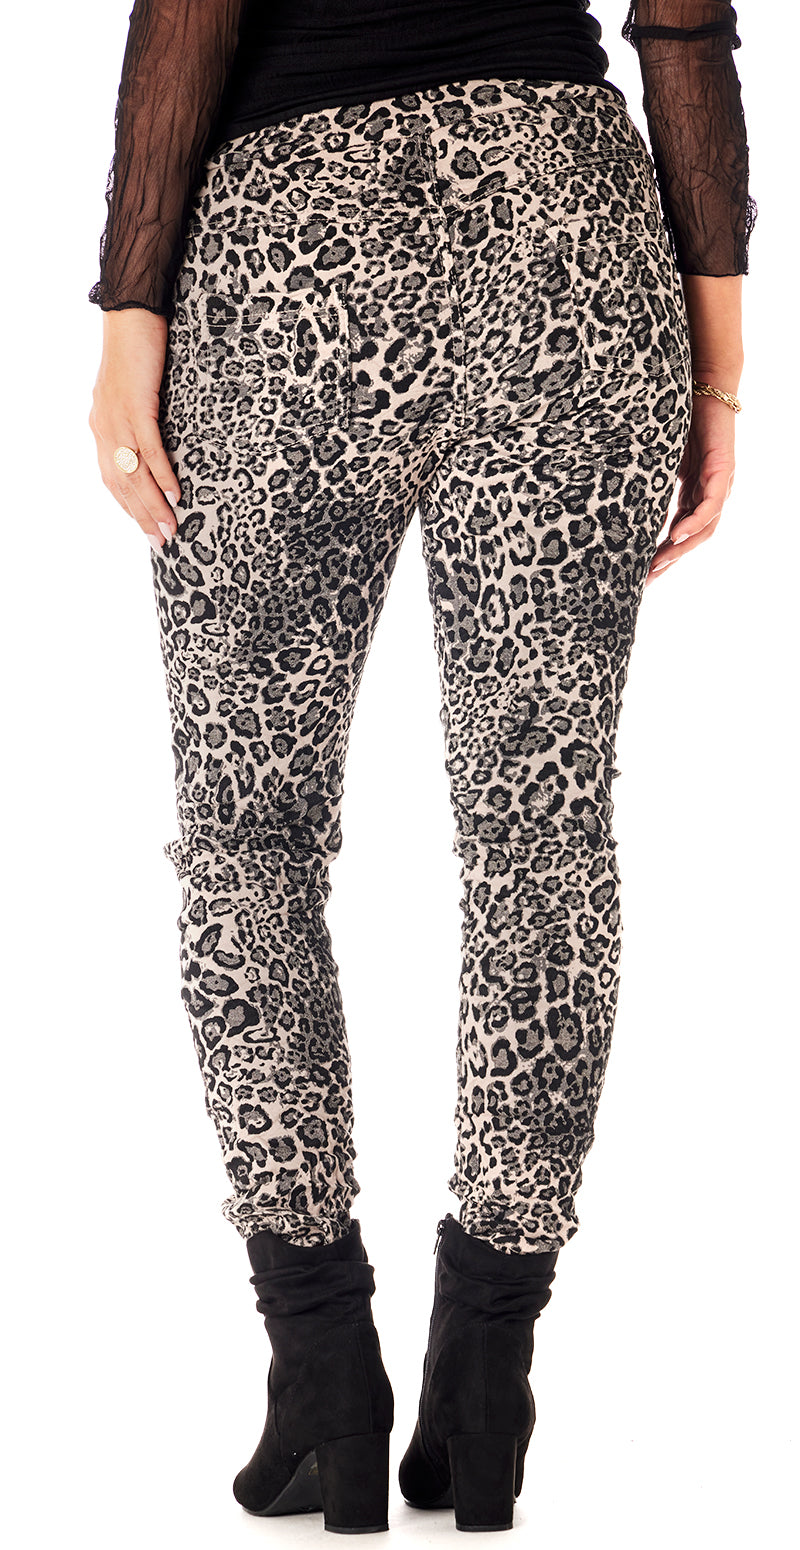 Bukser med leopard creme Likelondon